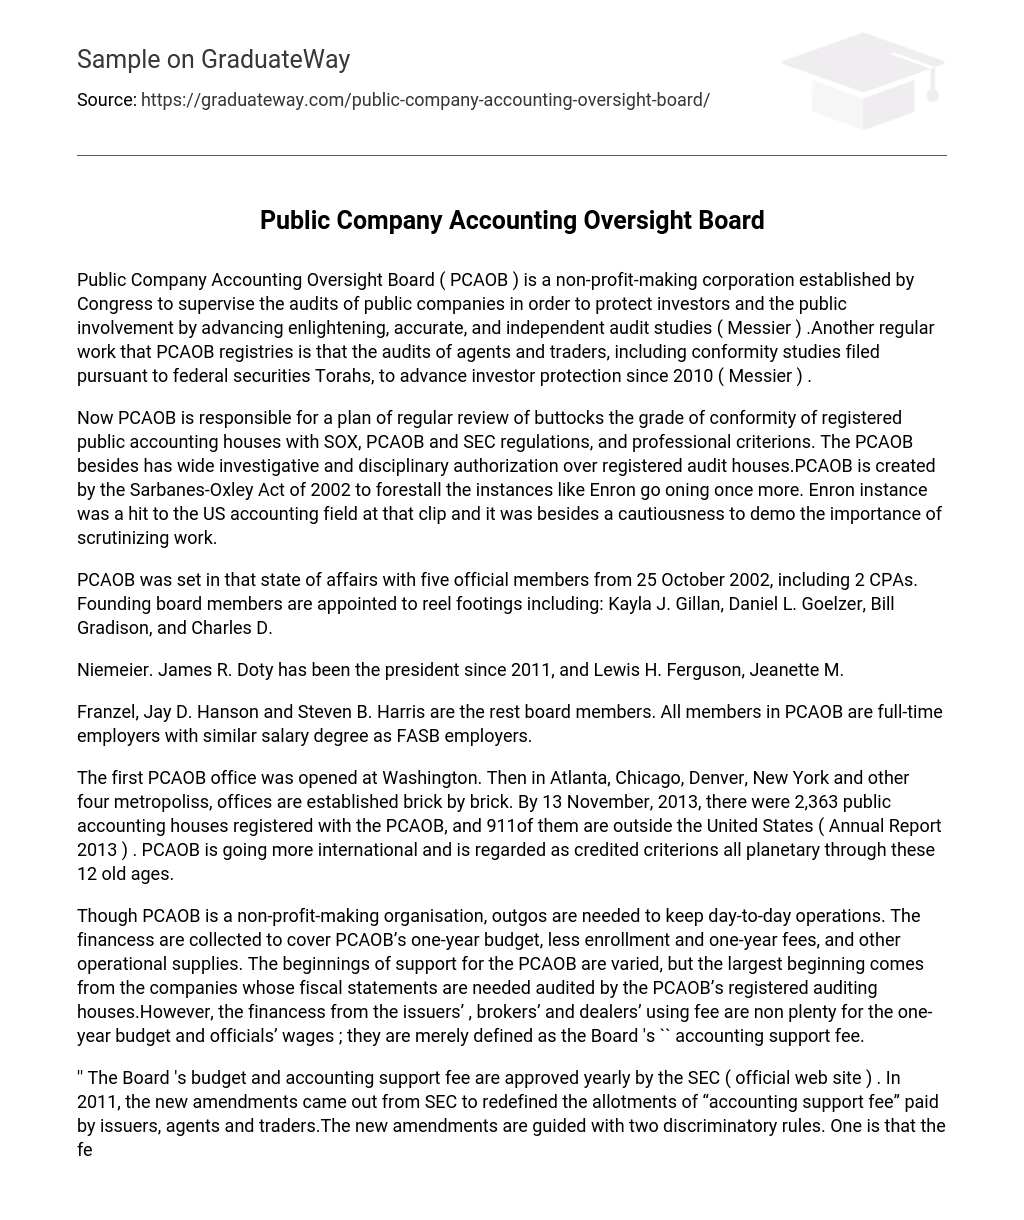 Public Company Accounting Oversight Board